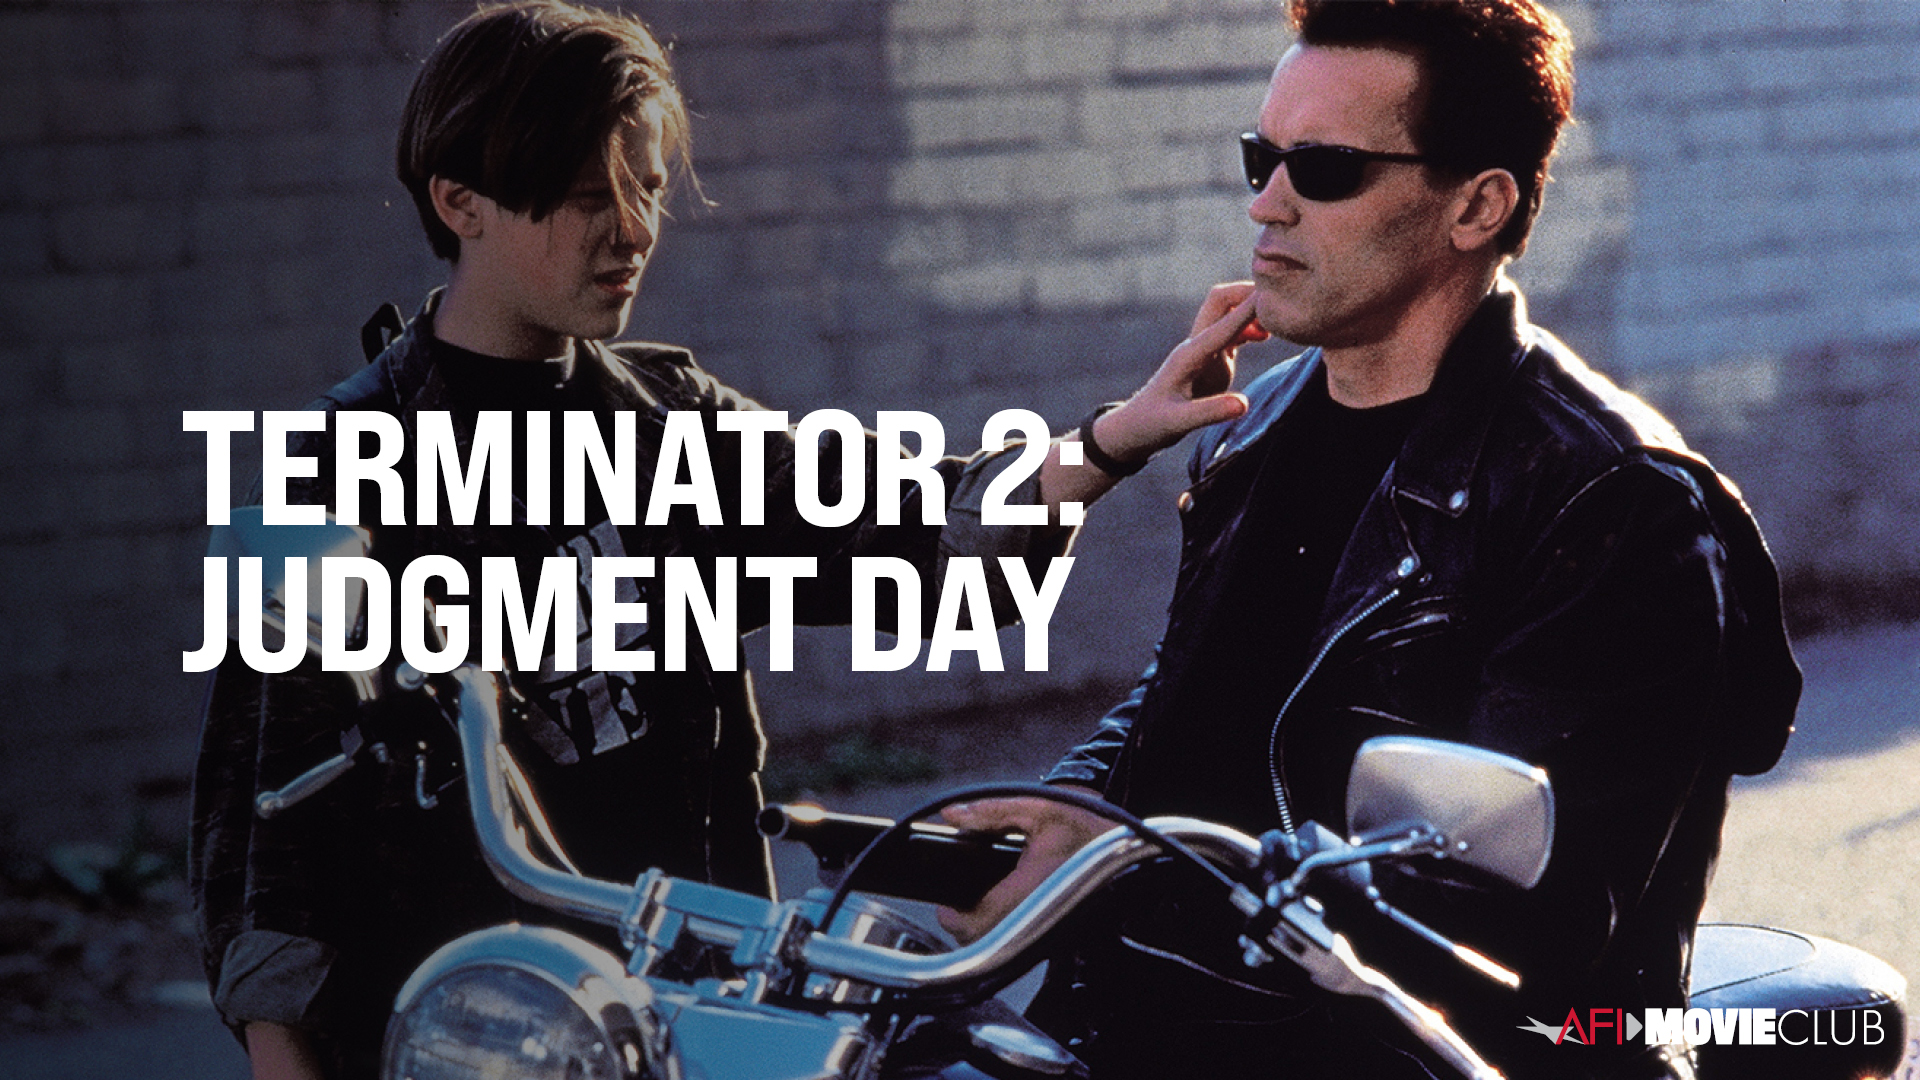 TERMINATOR 2: JUDGMENT DAY Film Still - Arnold Schwarzenegger and Edward Furlong